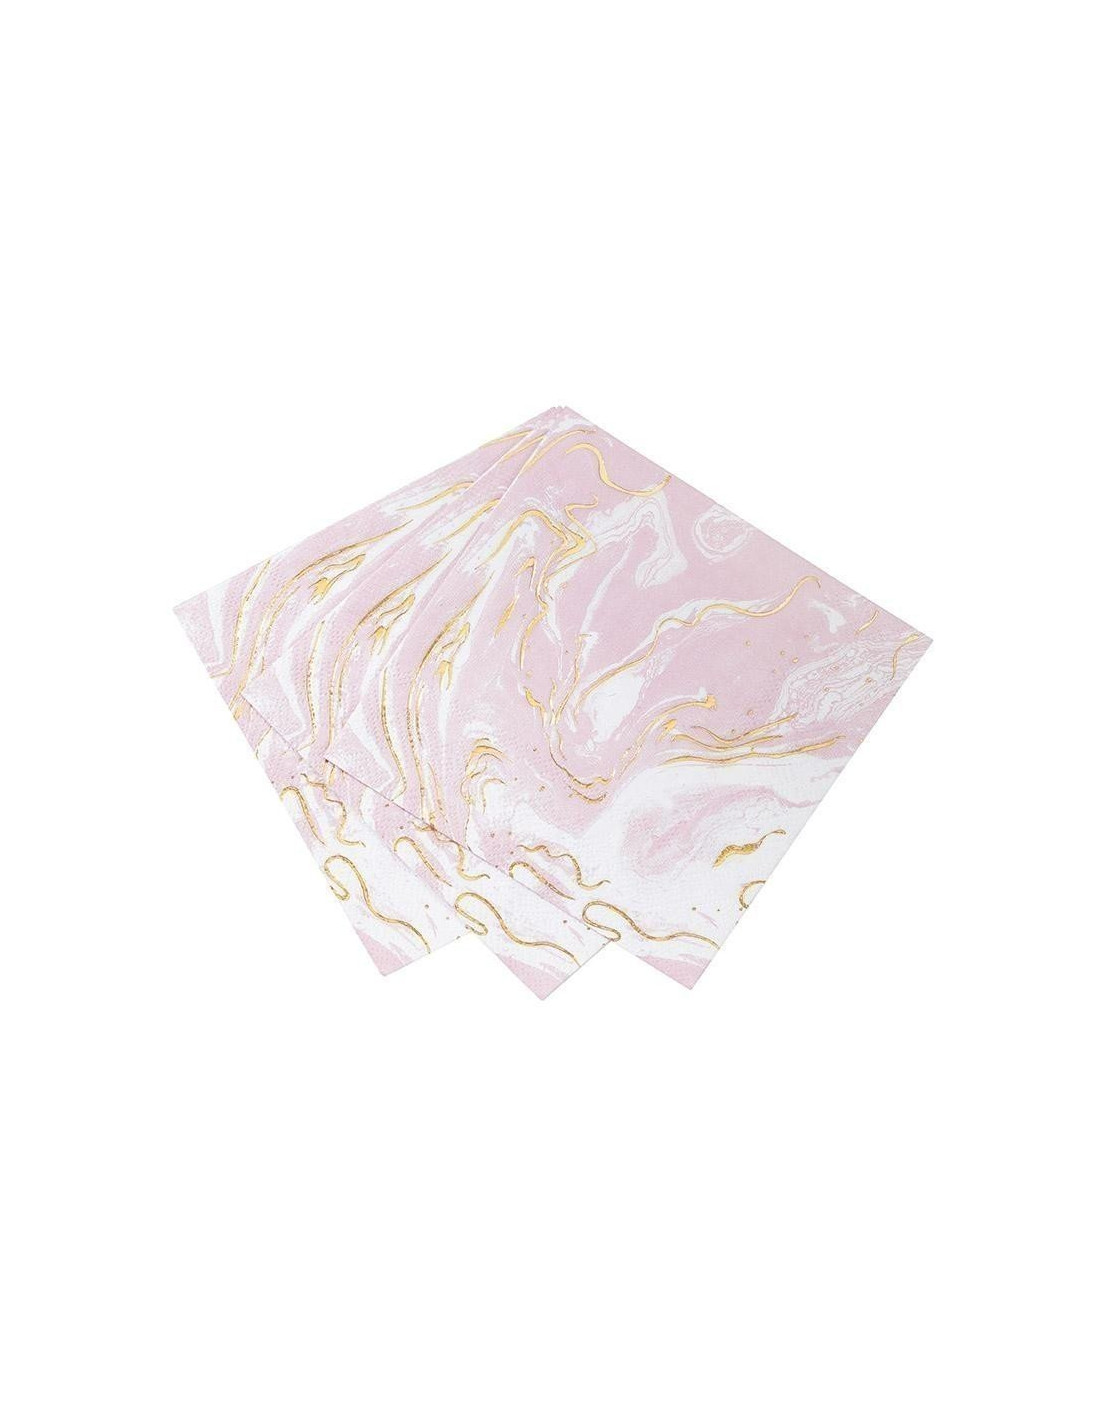 https://images2.lesbambetises.com/7883-thickbox_default/16-petites-serviettes-effet-marbre-rose-blanc-dore.jpg